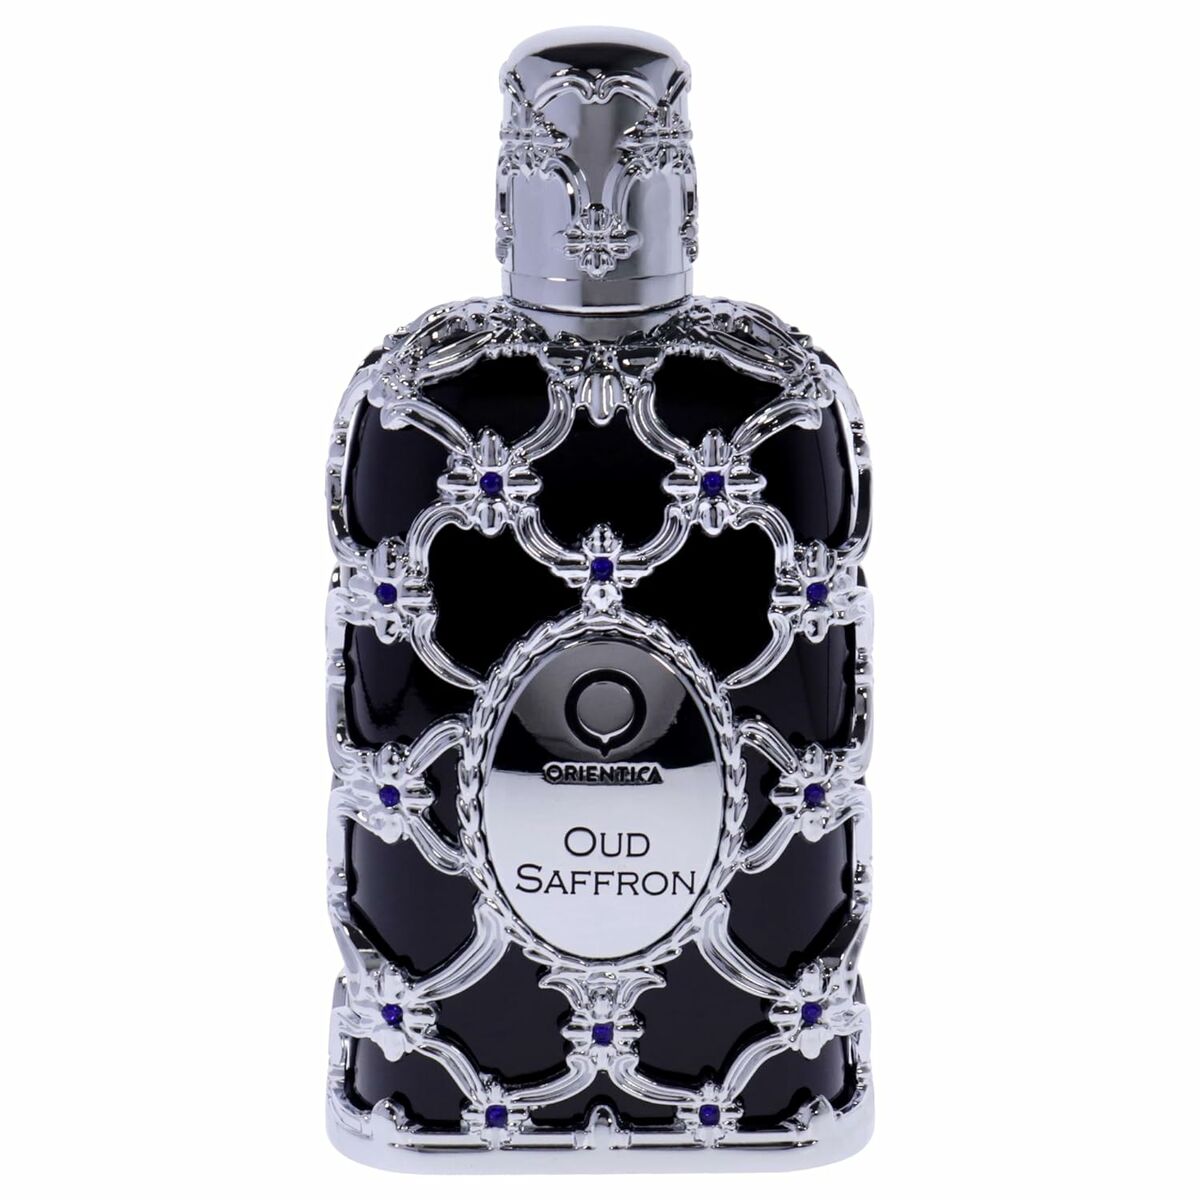 Uniseks Parfum Orientica EDP Oud Saffron 150 ml